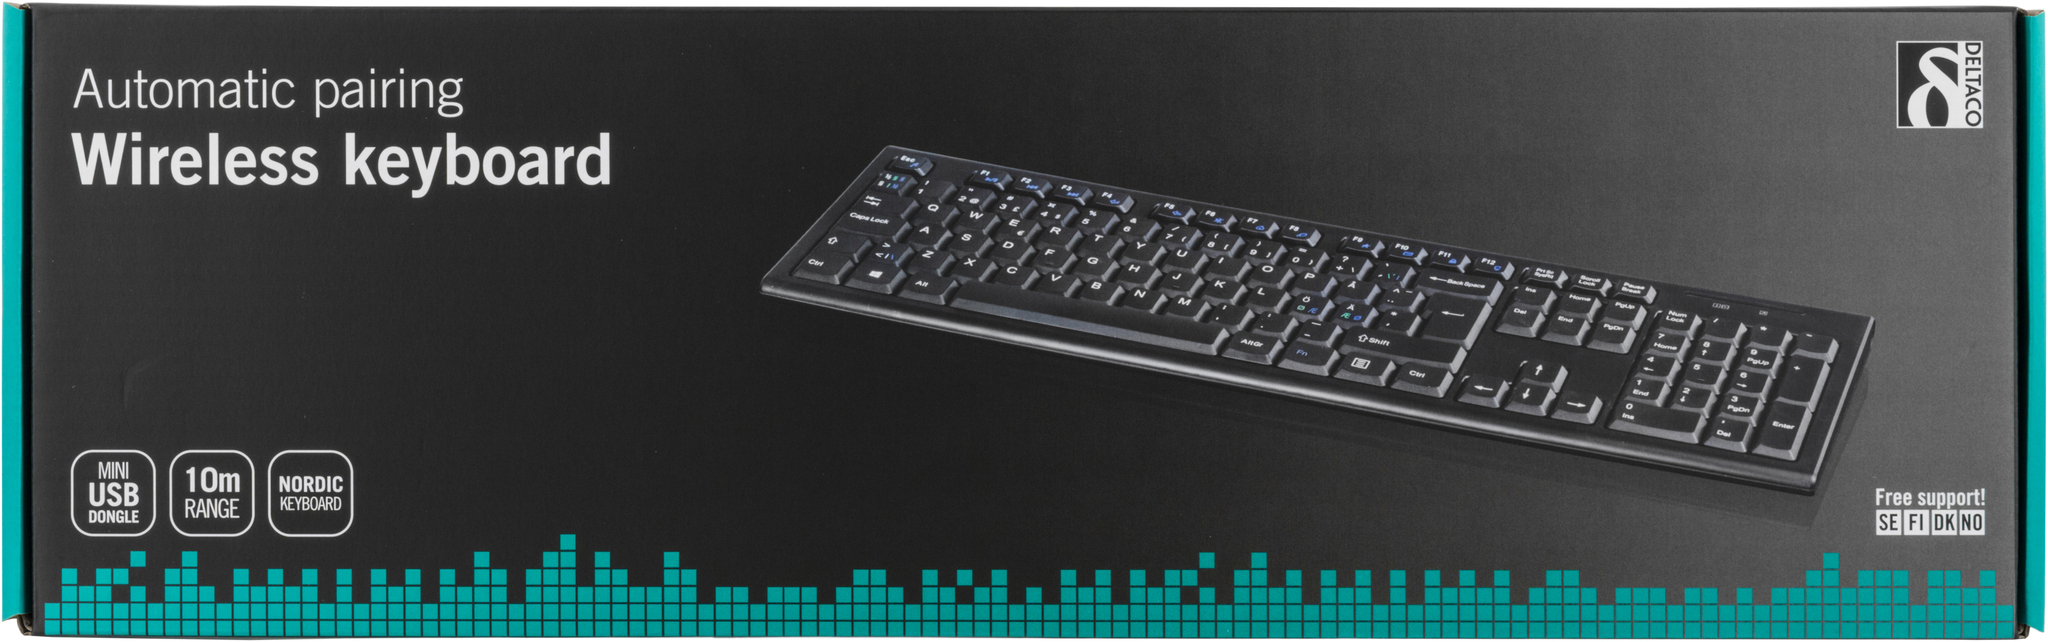 Deltaco Trådløst tastatur, nordisk layout, USB, nano-mottaker, 10m rekkevidde, svart